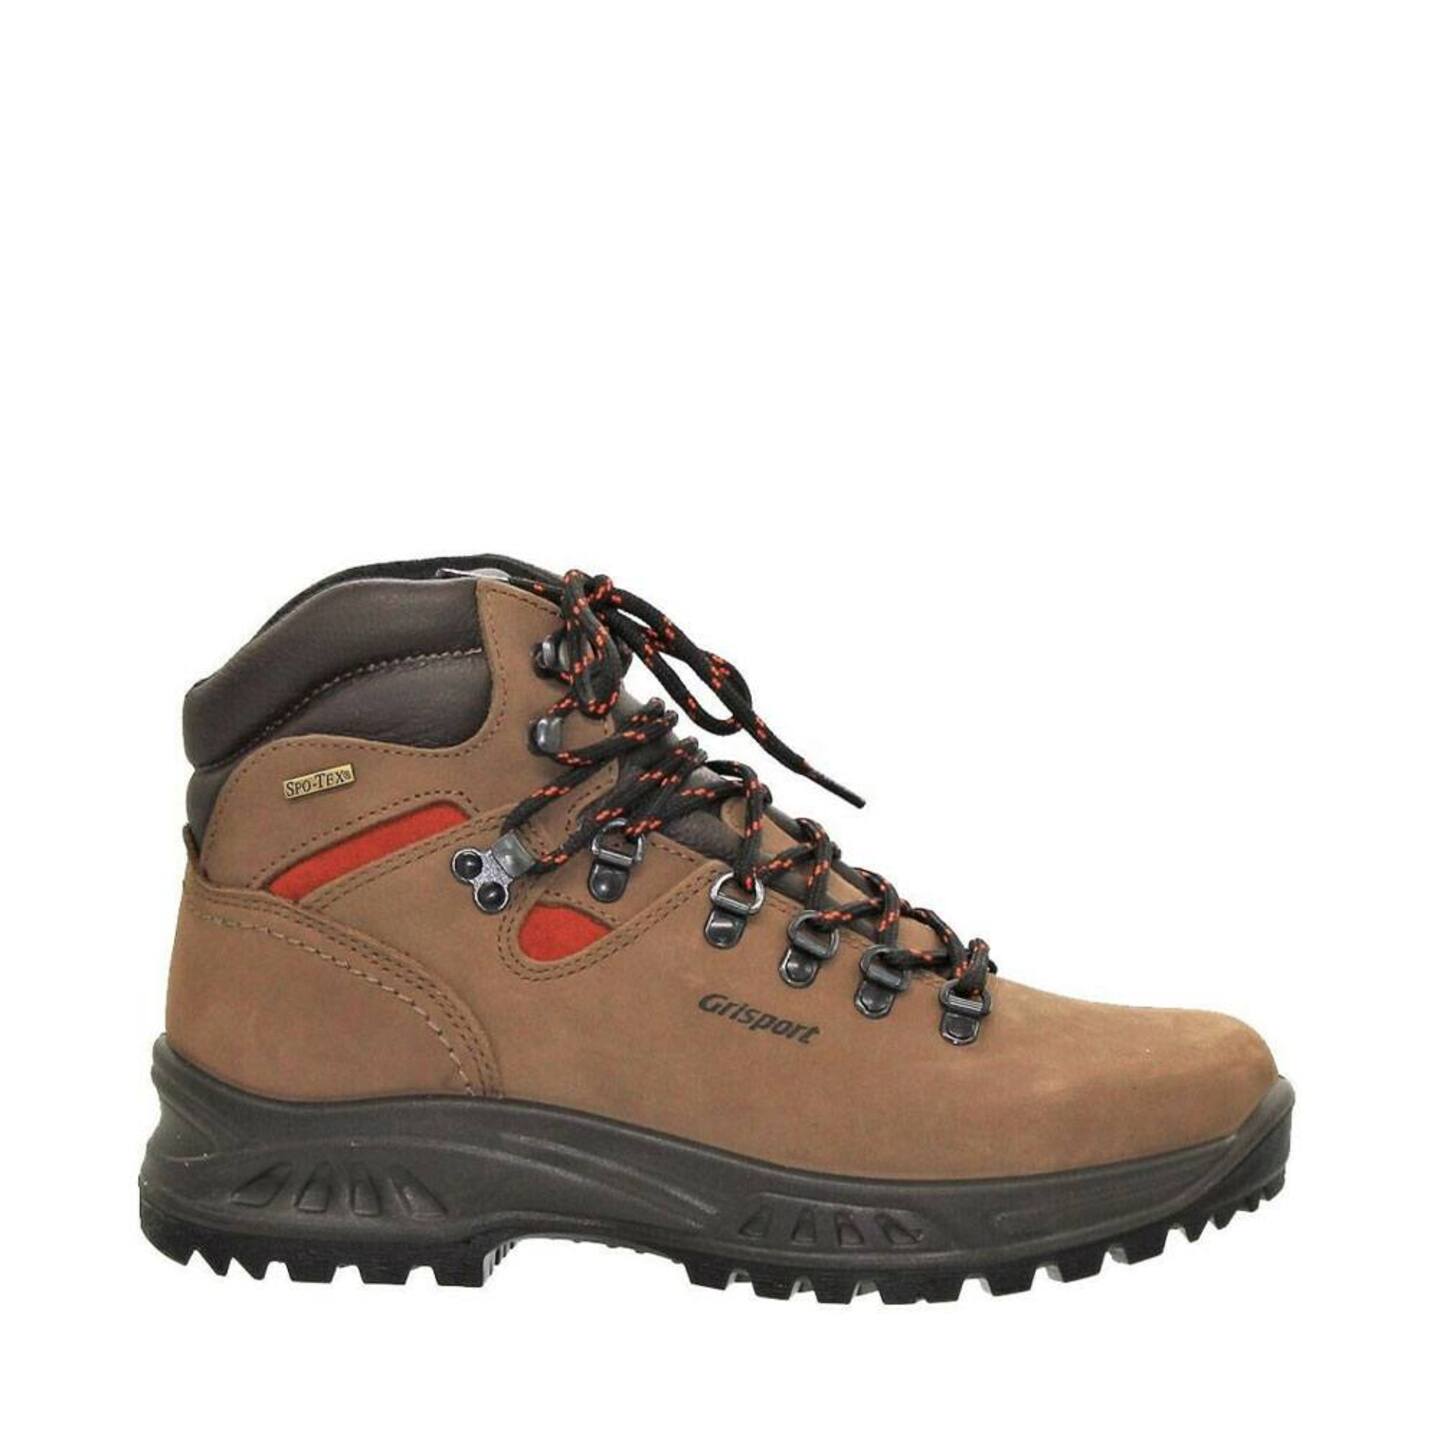 Brown Grisport Spo-Tex Mountaineering -12401-BROWN Boots Waterproof